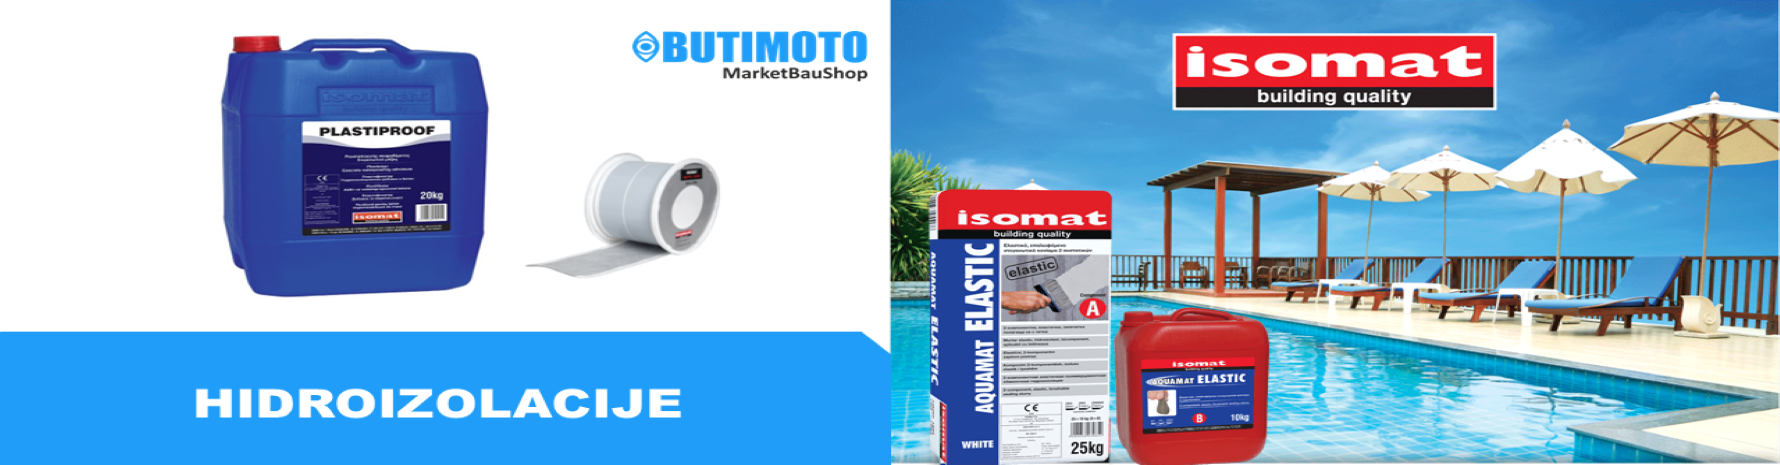 BUTIMOTO | MarketBauShop - Hidroizolacija